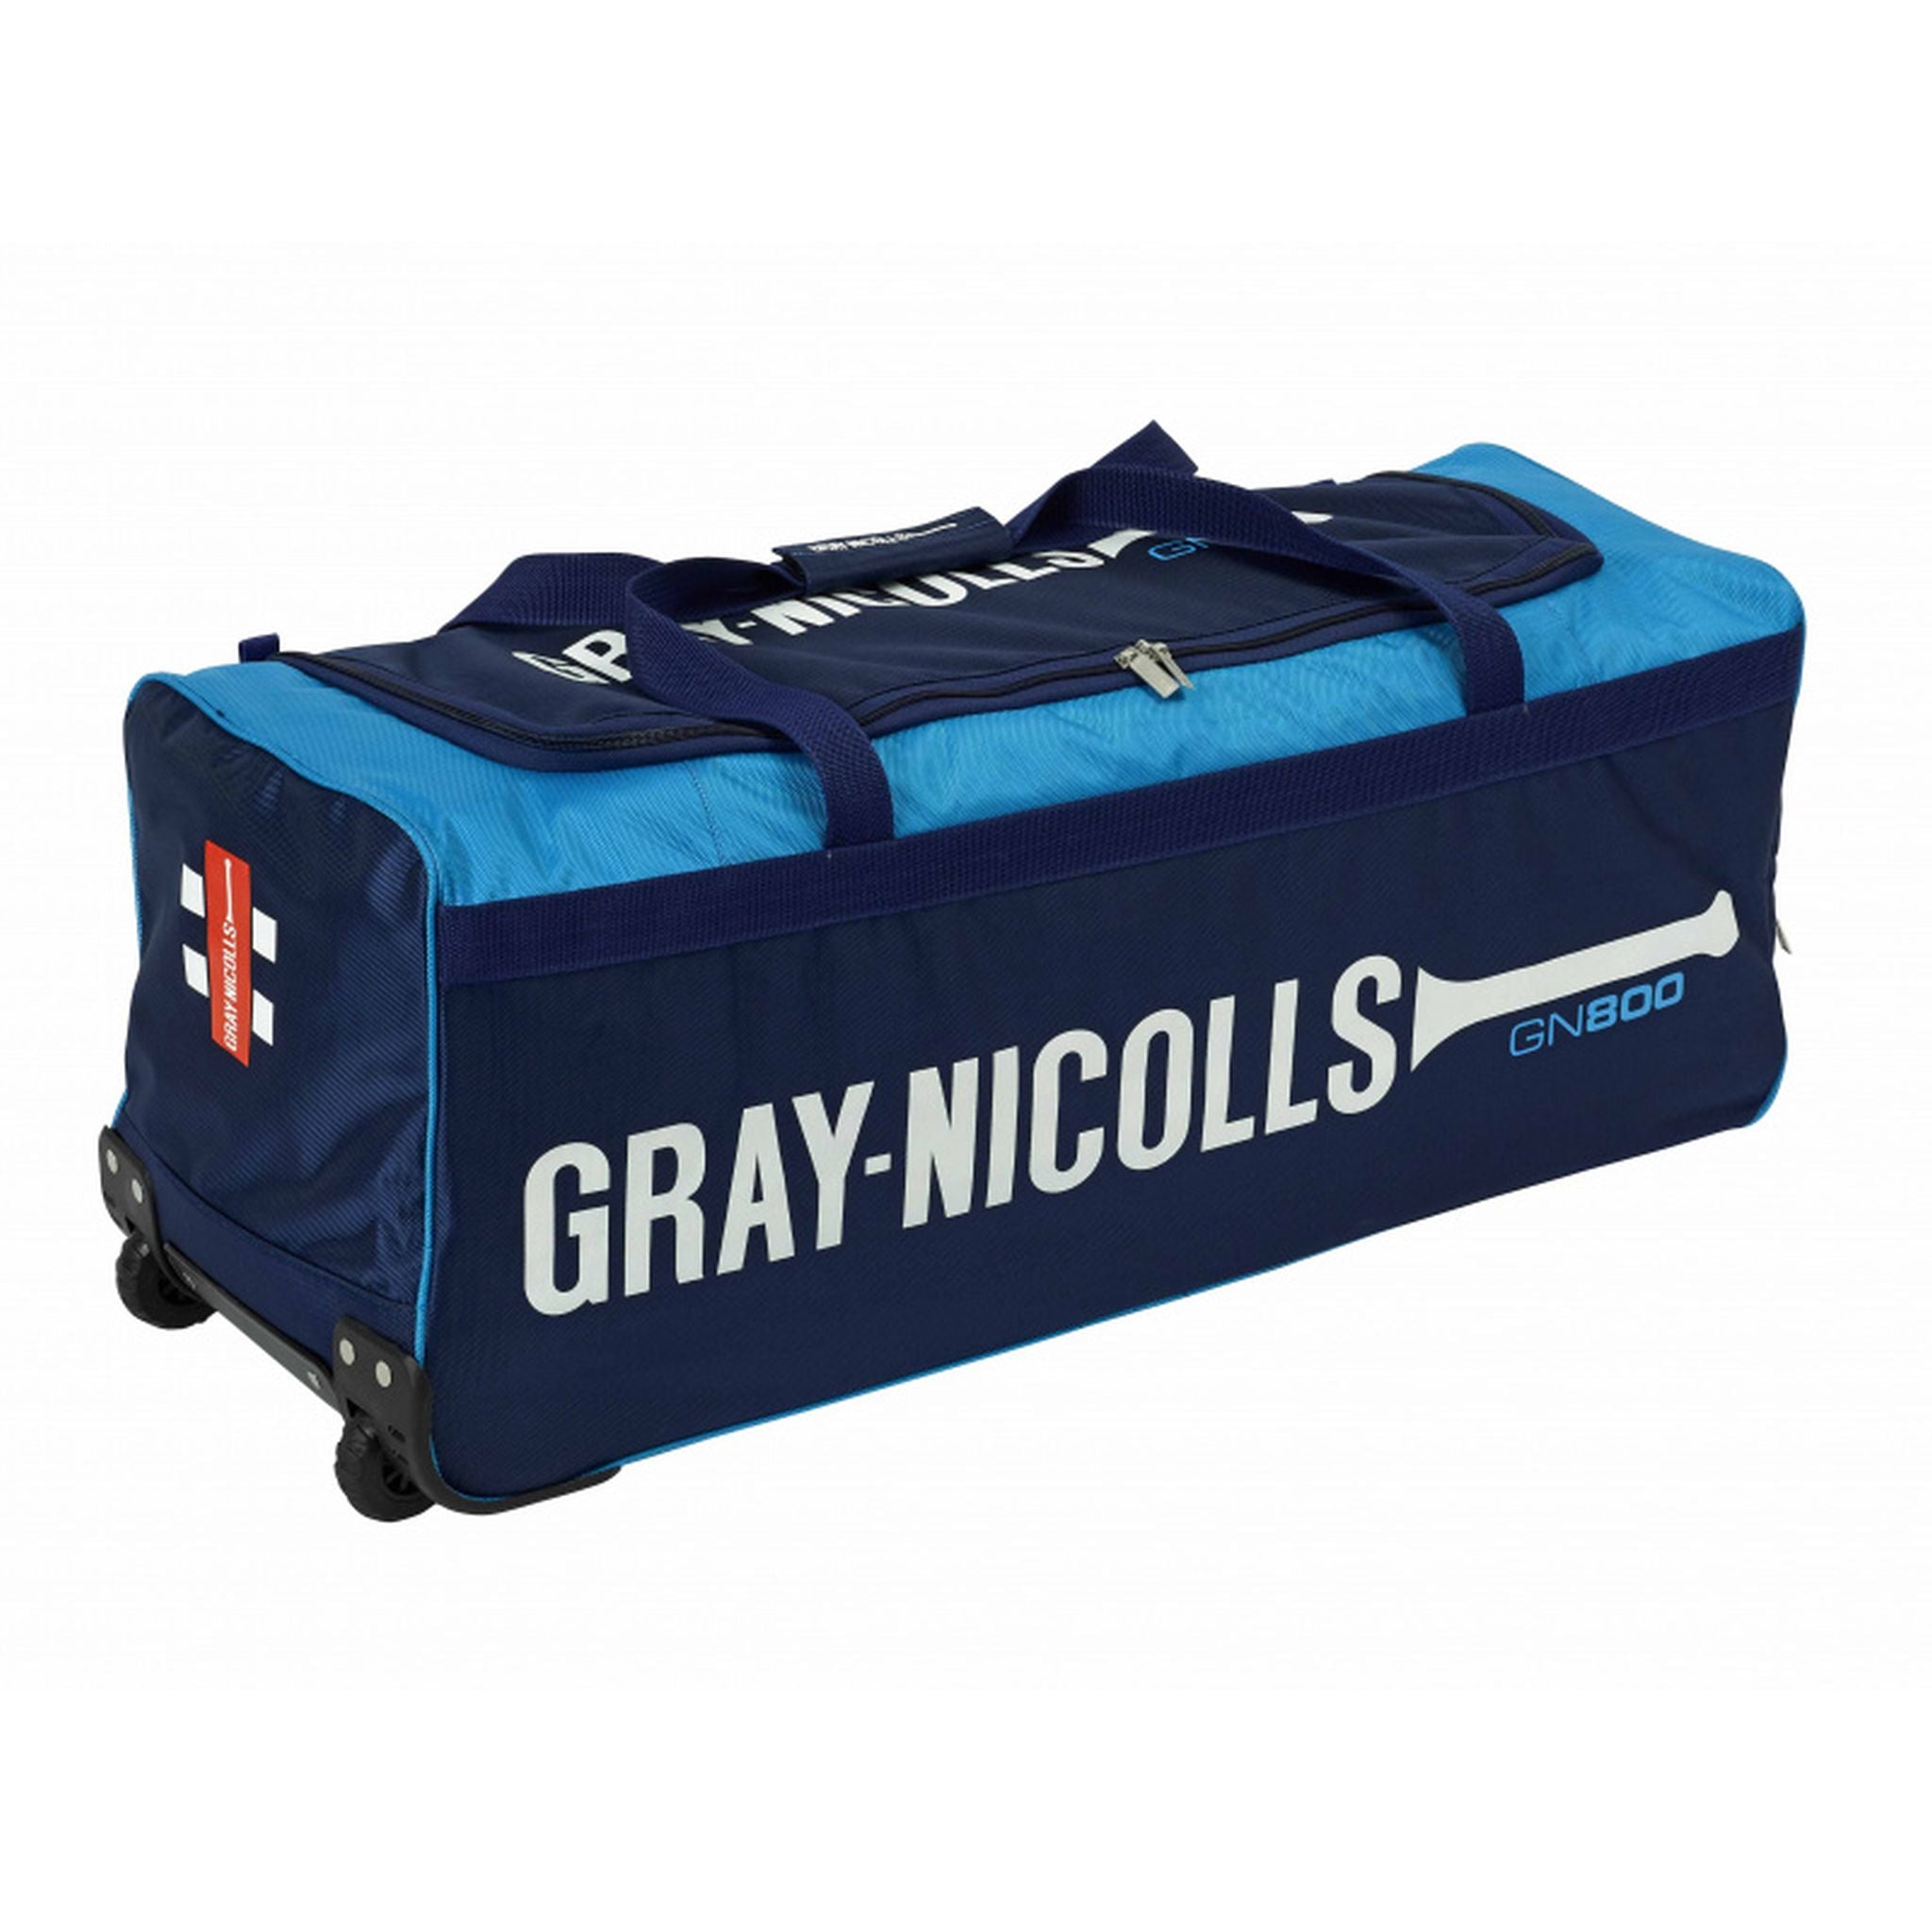 Gray-Nicolls GN 800 Cricket Wheel Bag